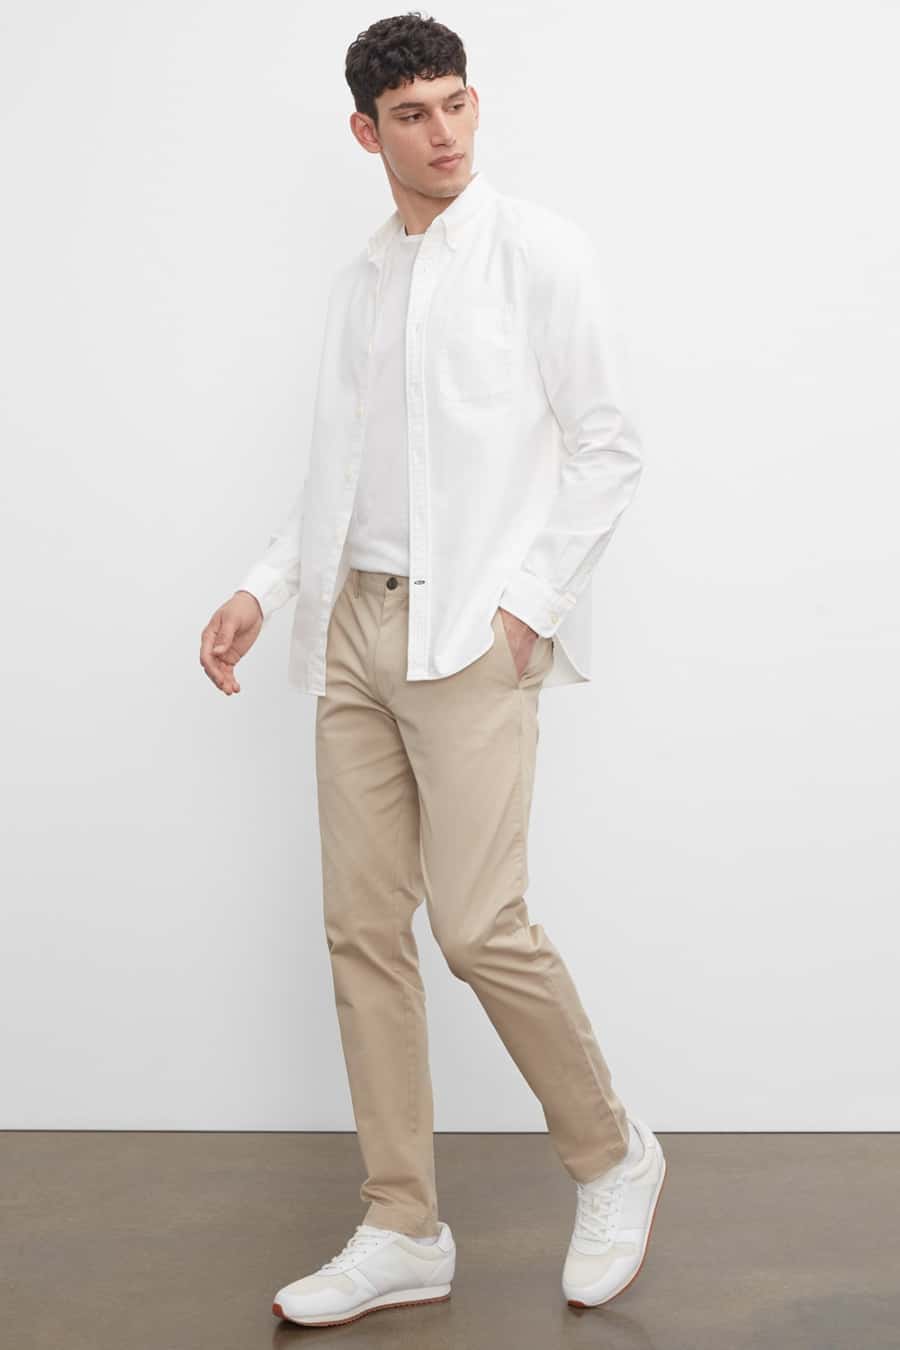 Men's khaki pants, white T-shirt, white open shirt and white sneakers outfit